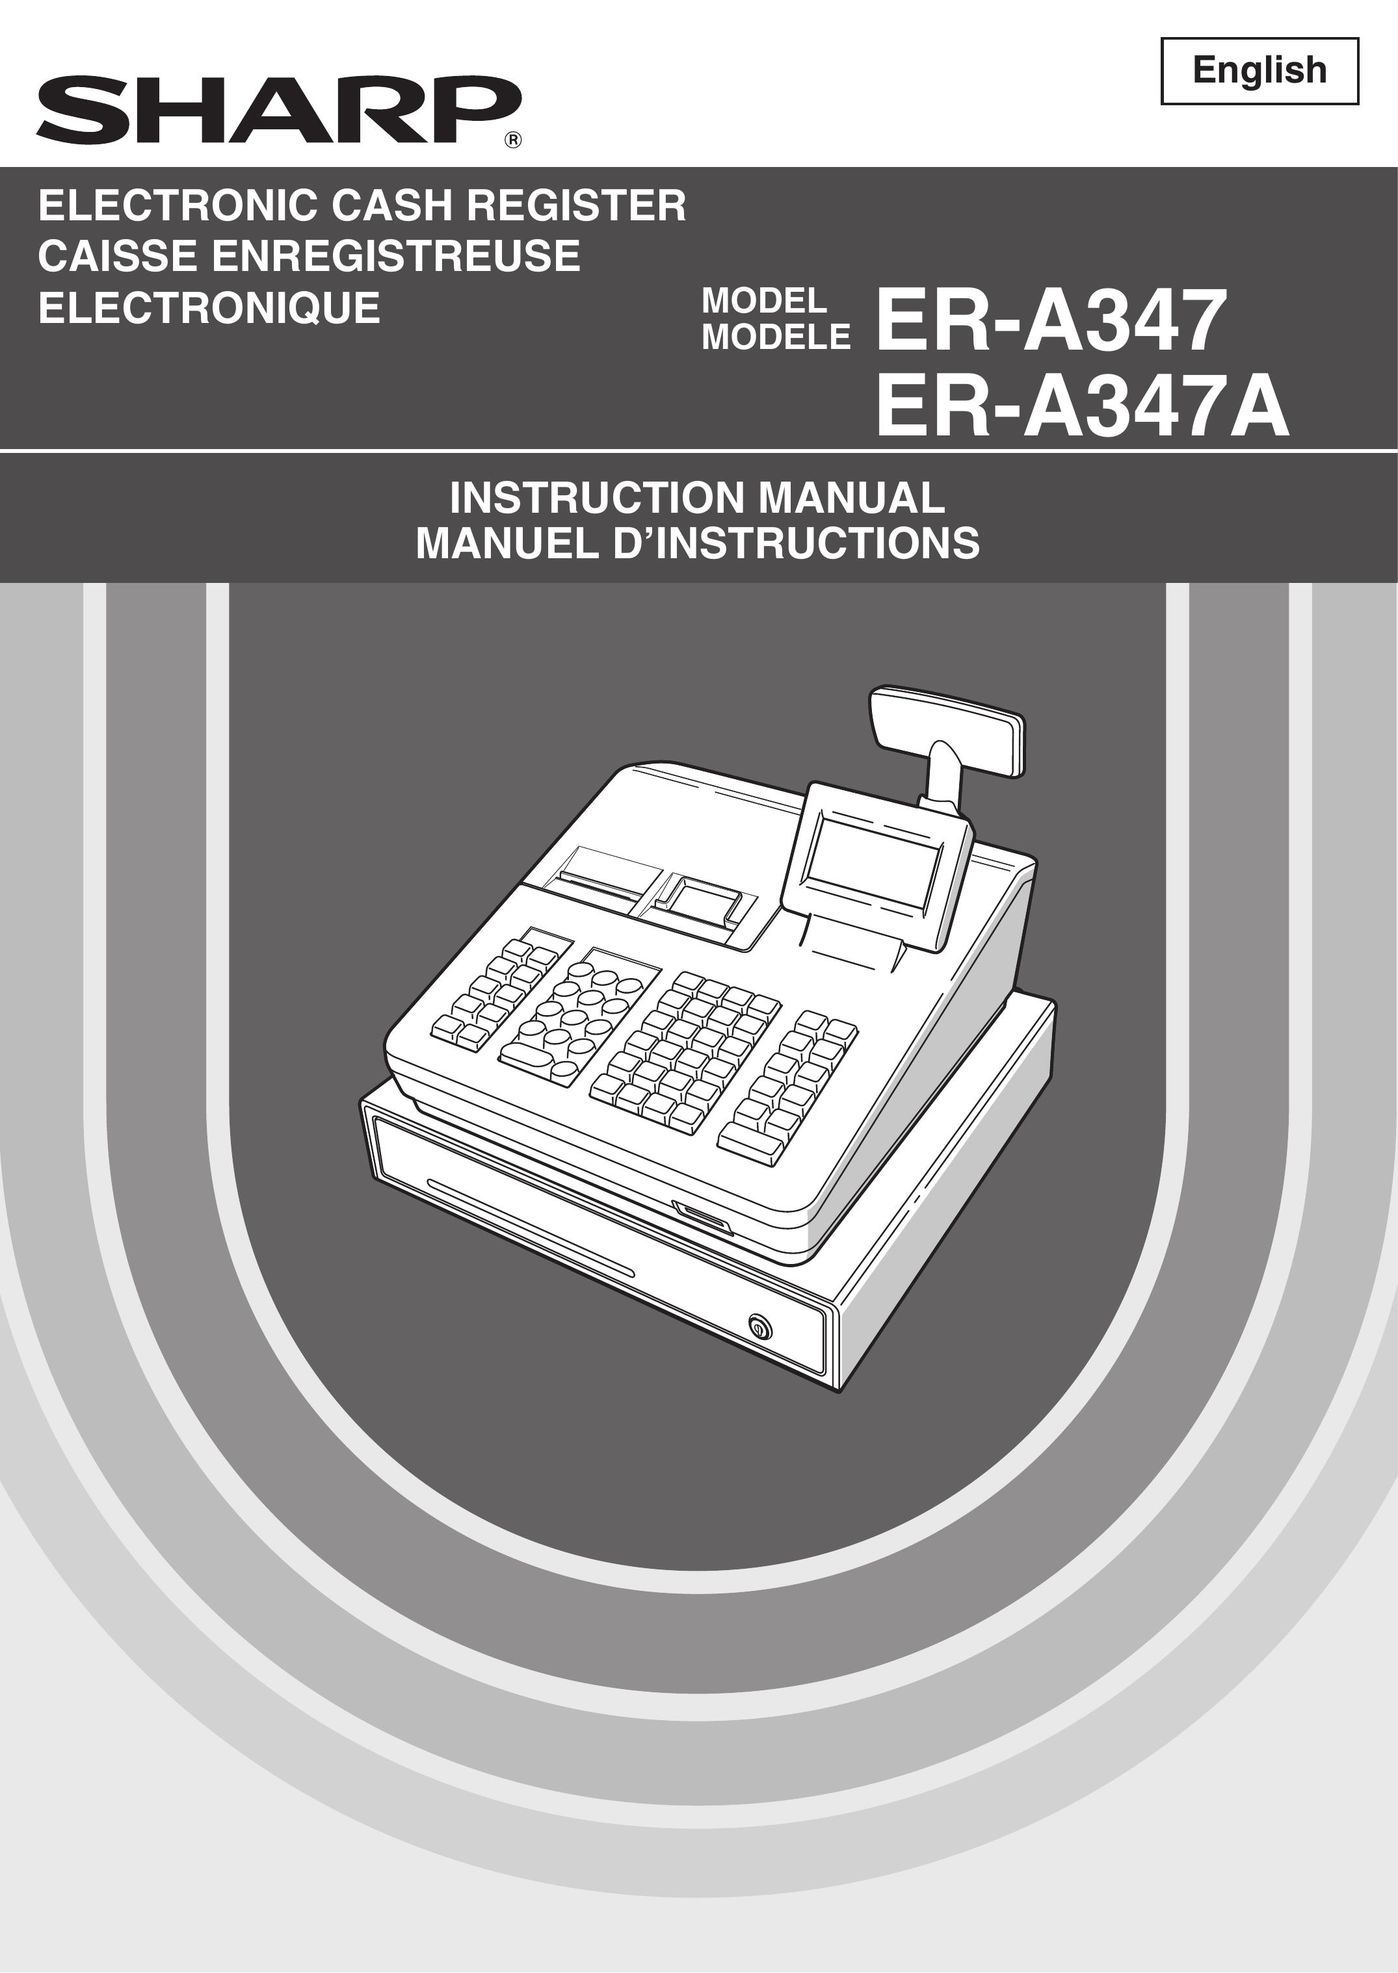 Sharp ER-A347A Cash Register User Manual